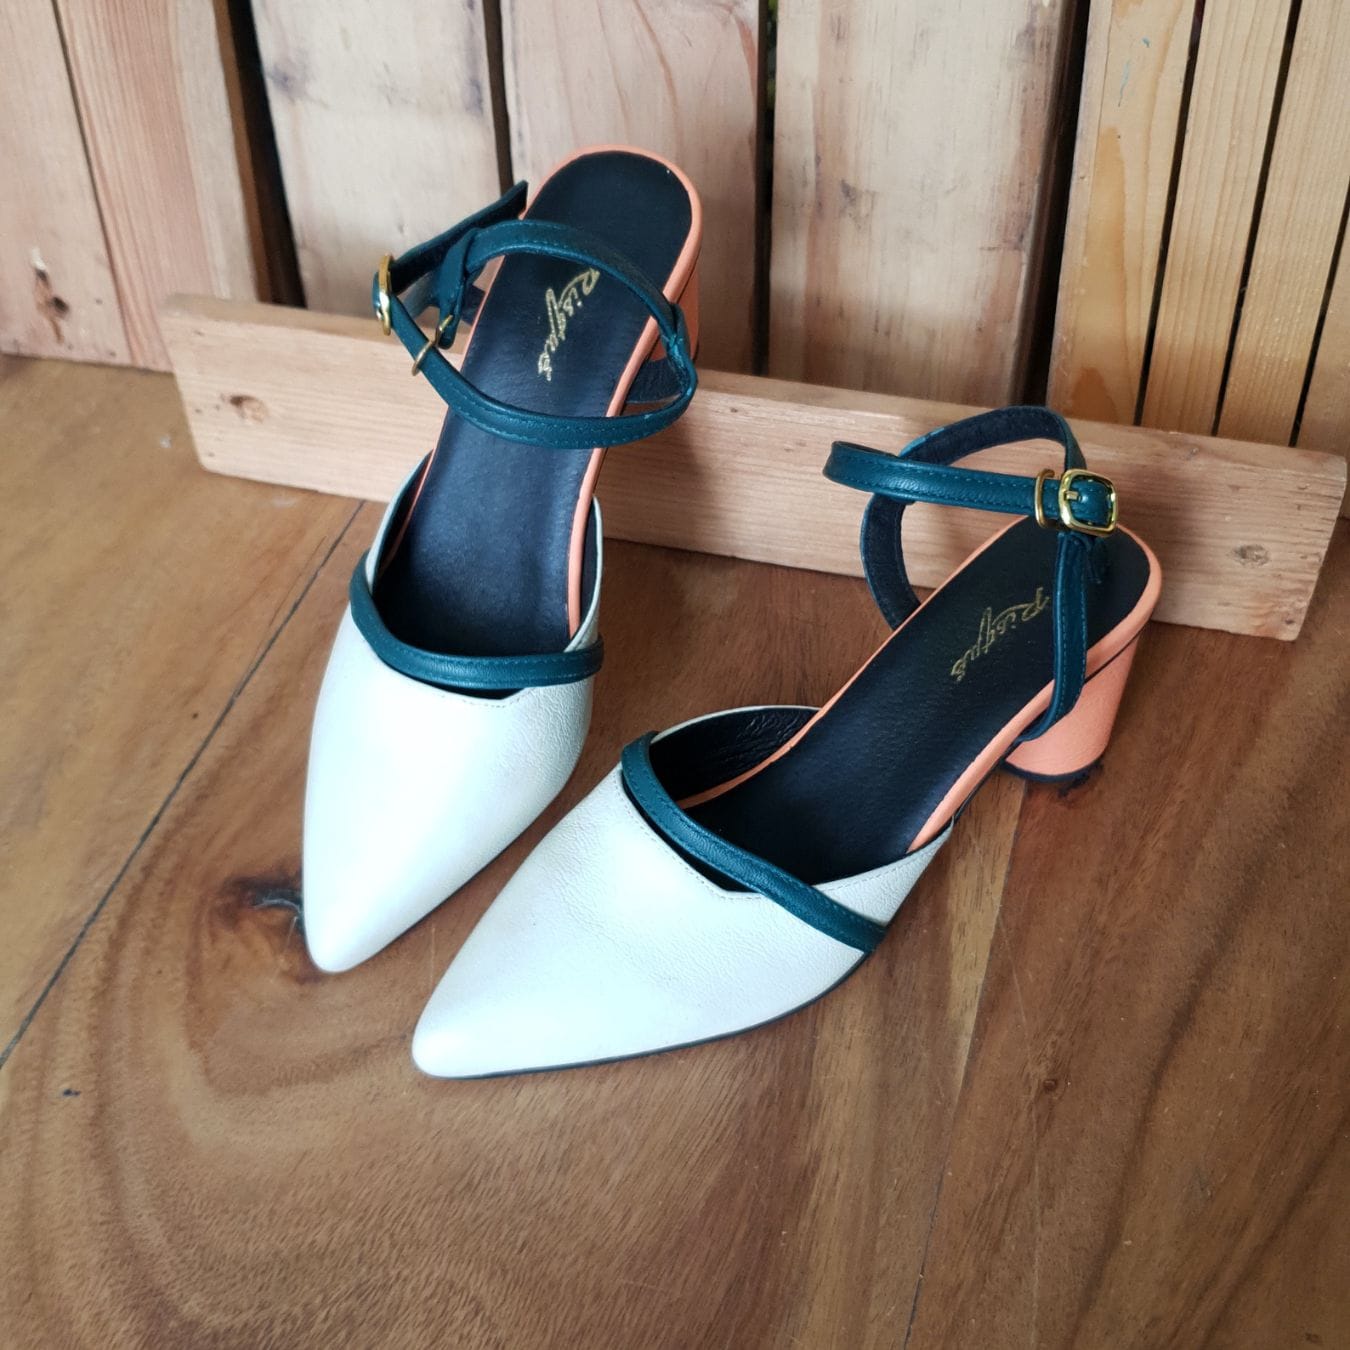 Pointed tri-color heels